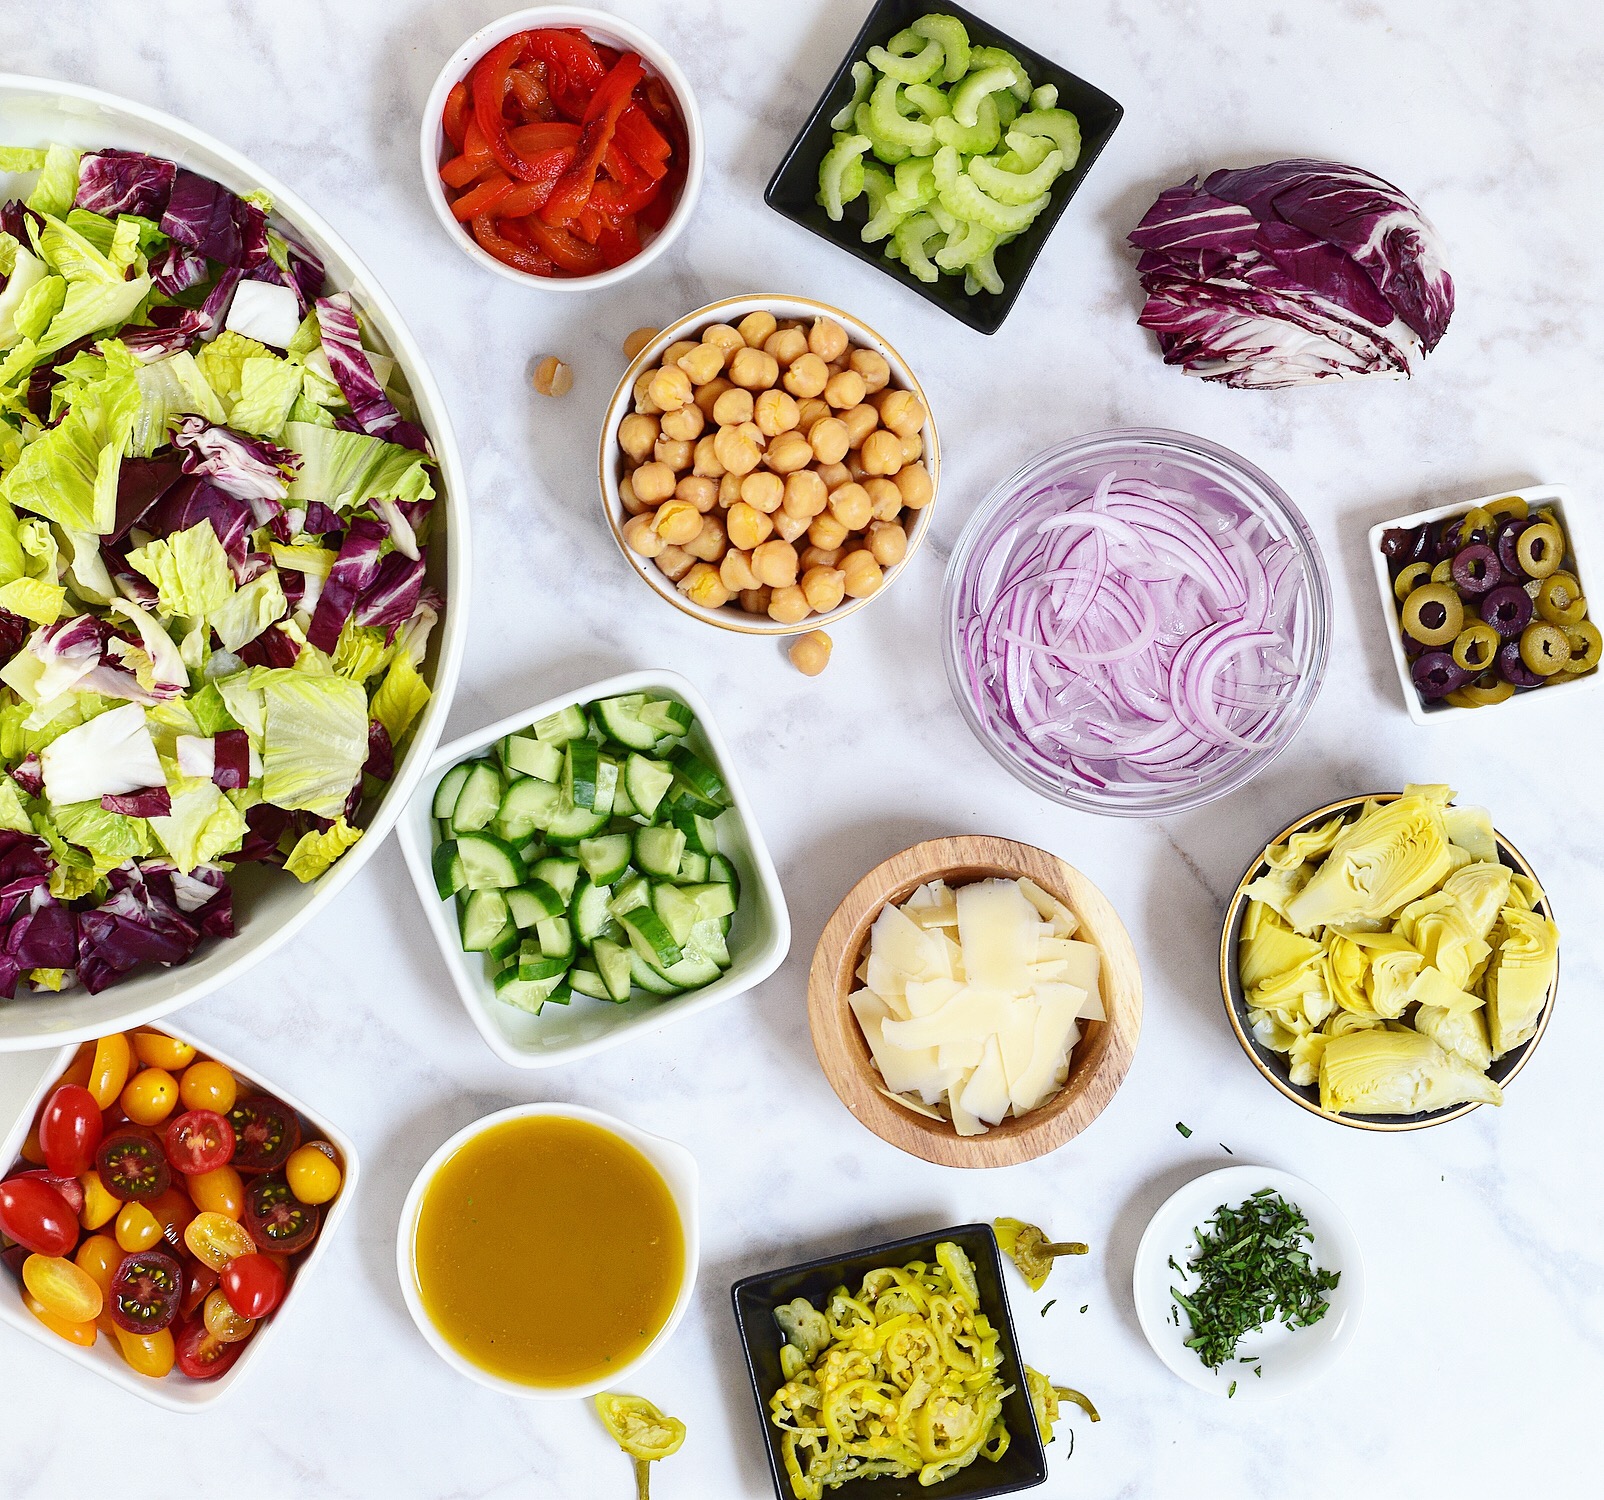 https://goodhealthgourmet.com/wp-content/uploads/2019/05/Vegan-Classic-Italian-Chopped-Salad-Mise.jpg